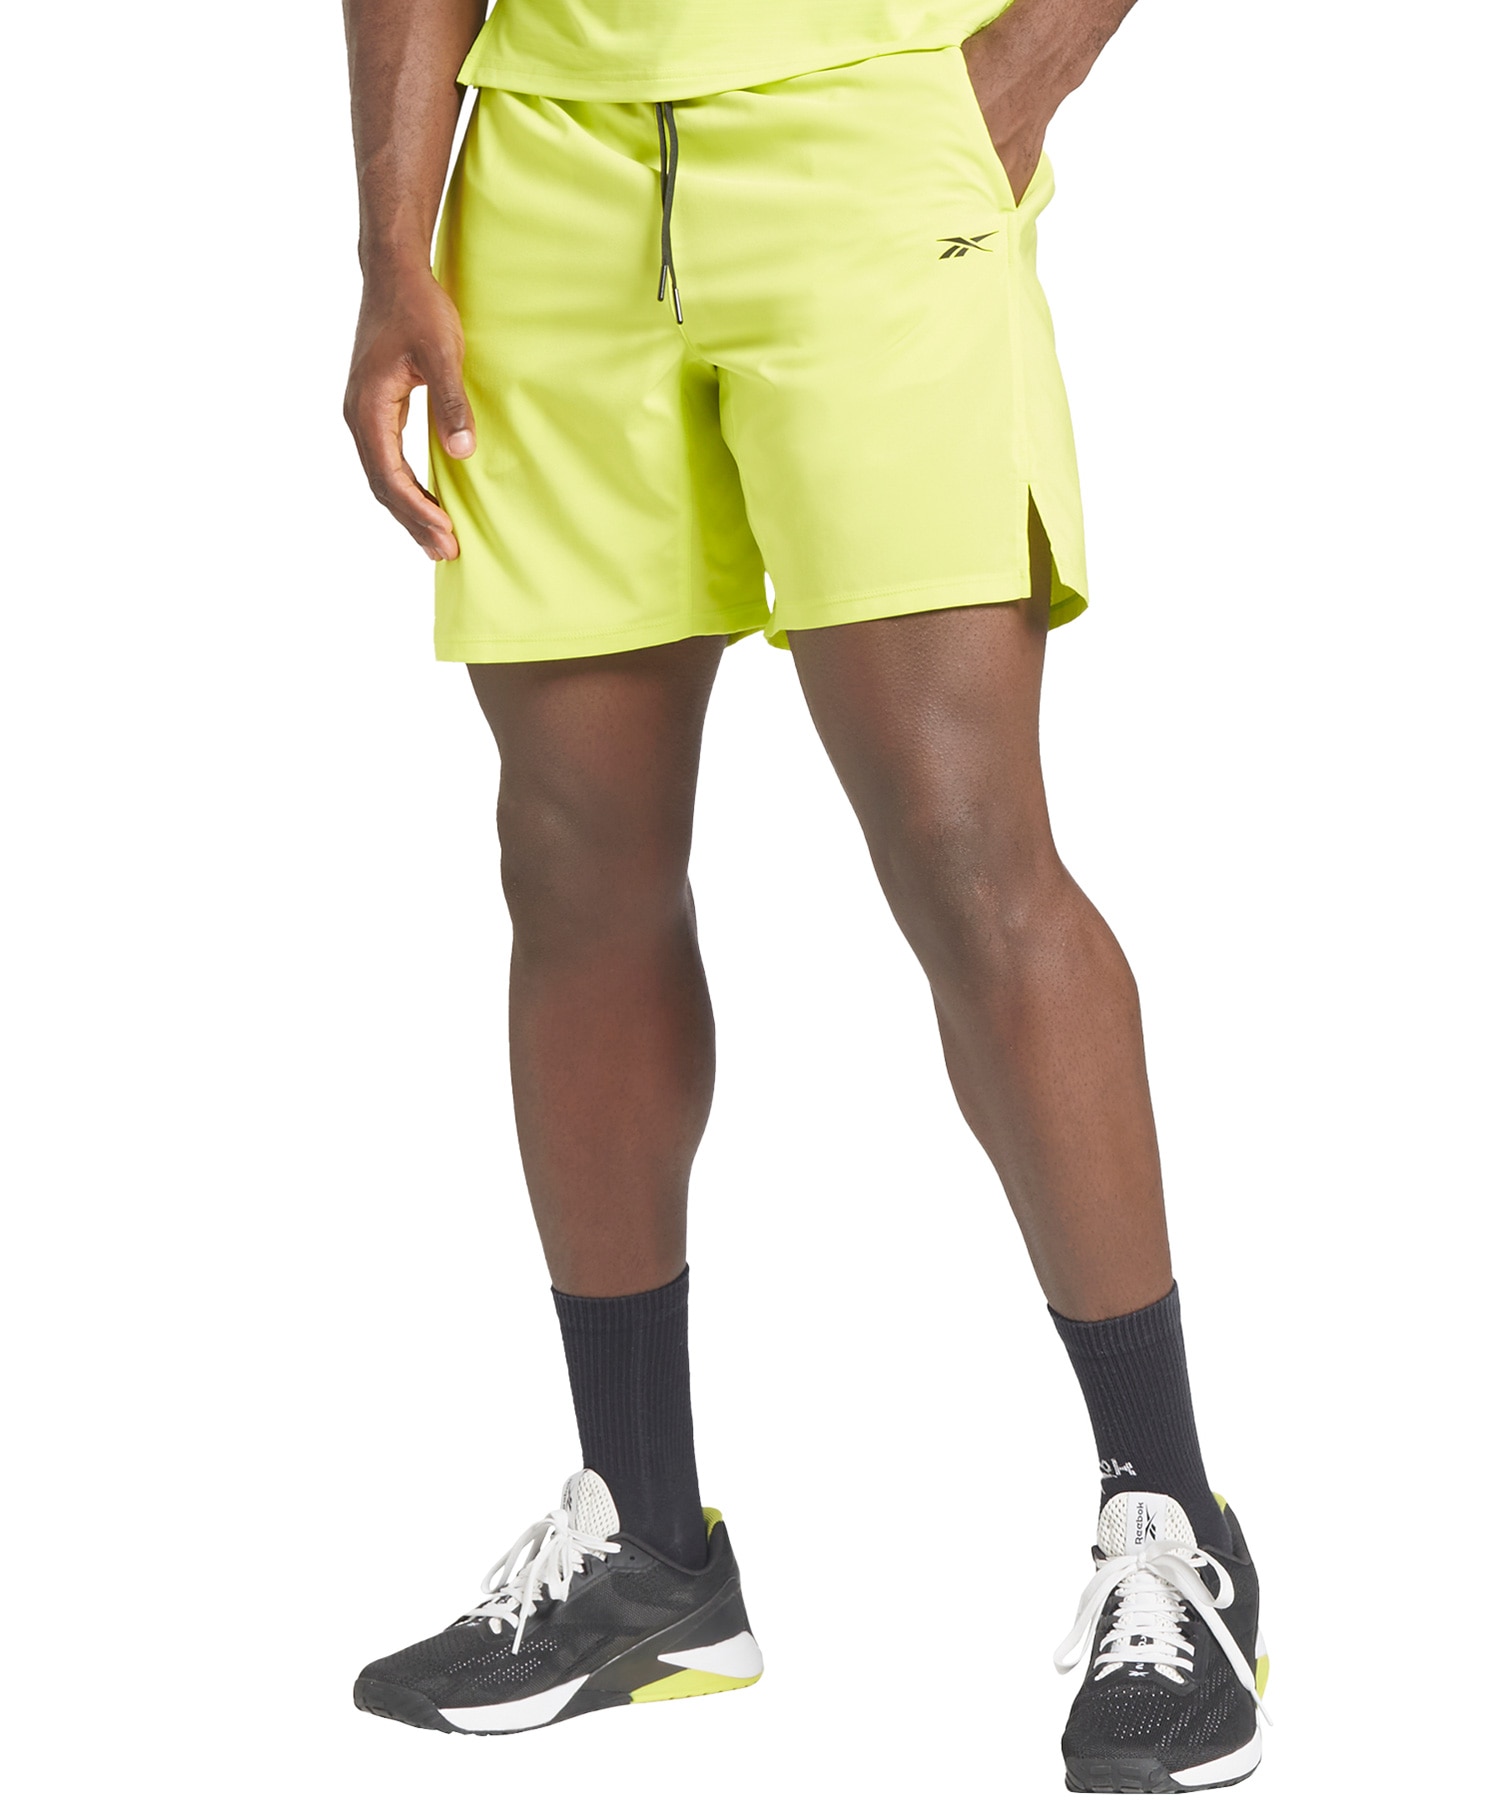 Reebok Speed shorts